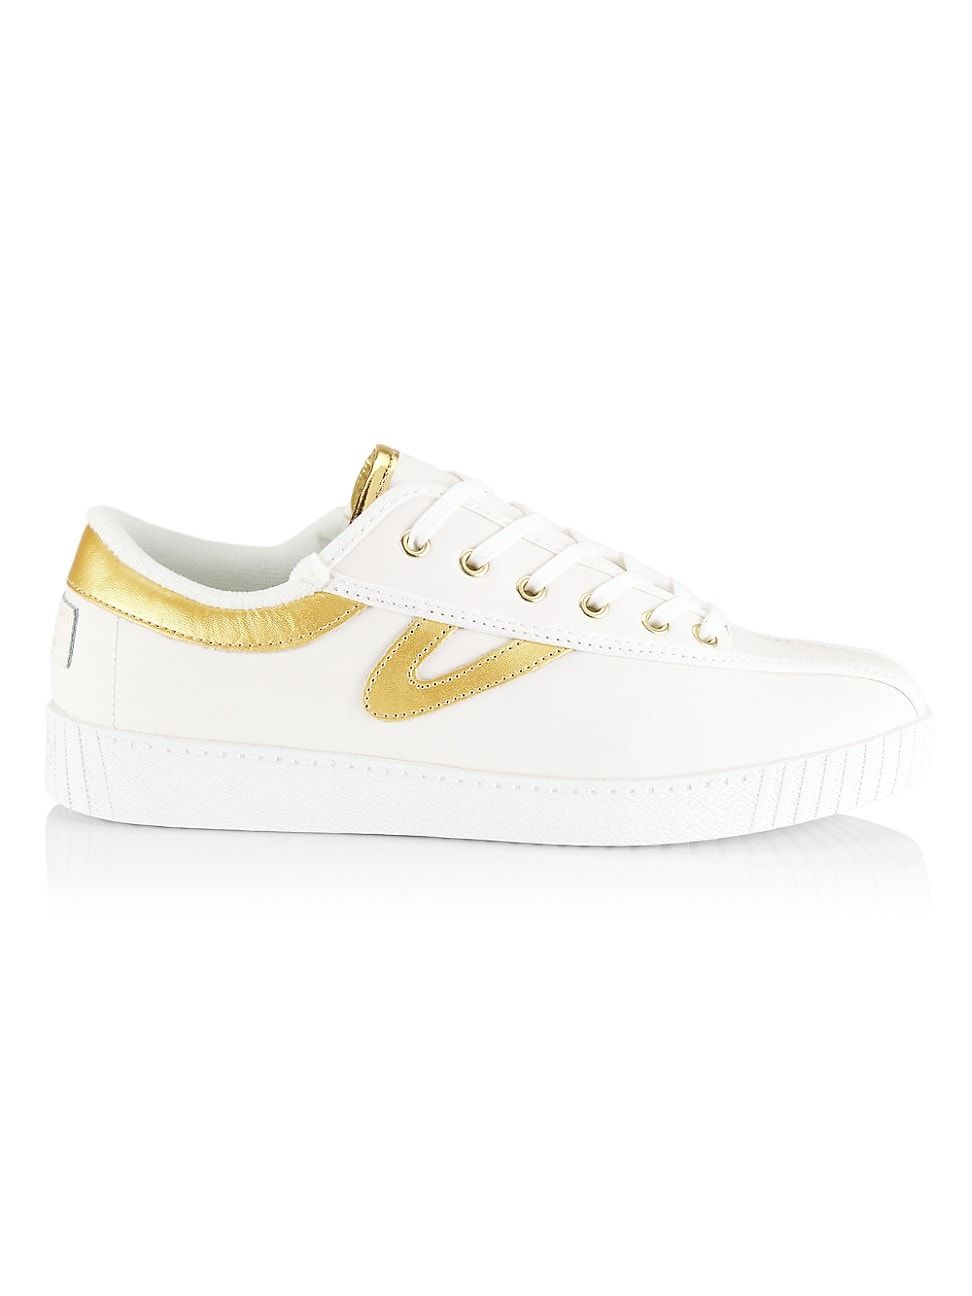 Women's Draper James x Tretorn Nylite Plus Low-Top Sneakers - White Gold - Size 9 | Saks Fifth Avenue